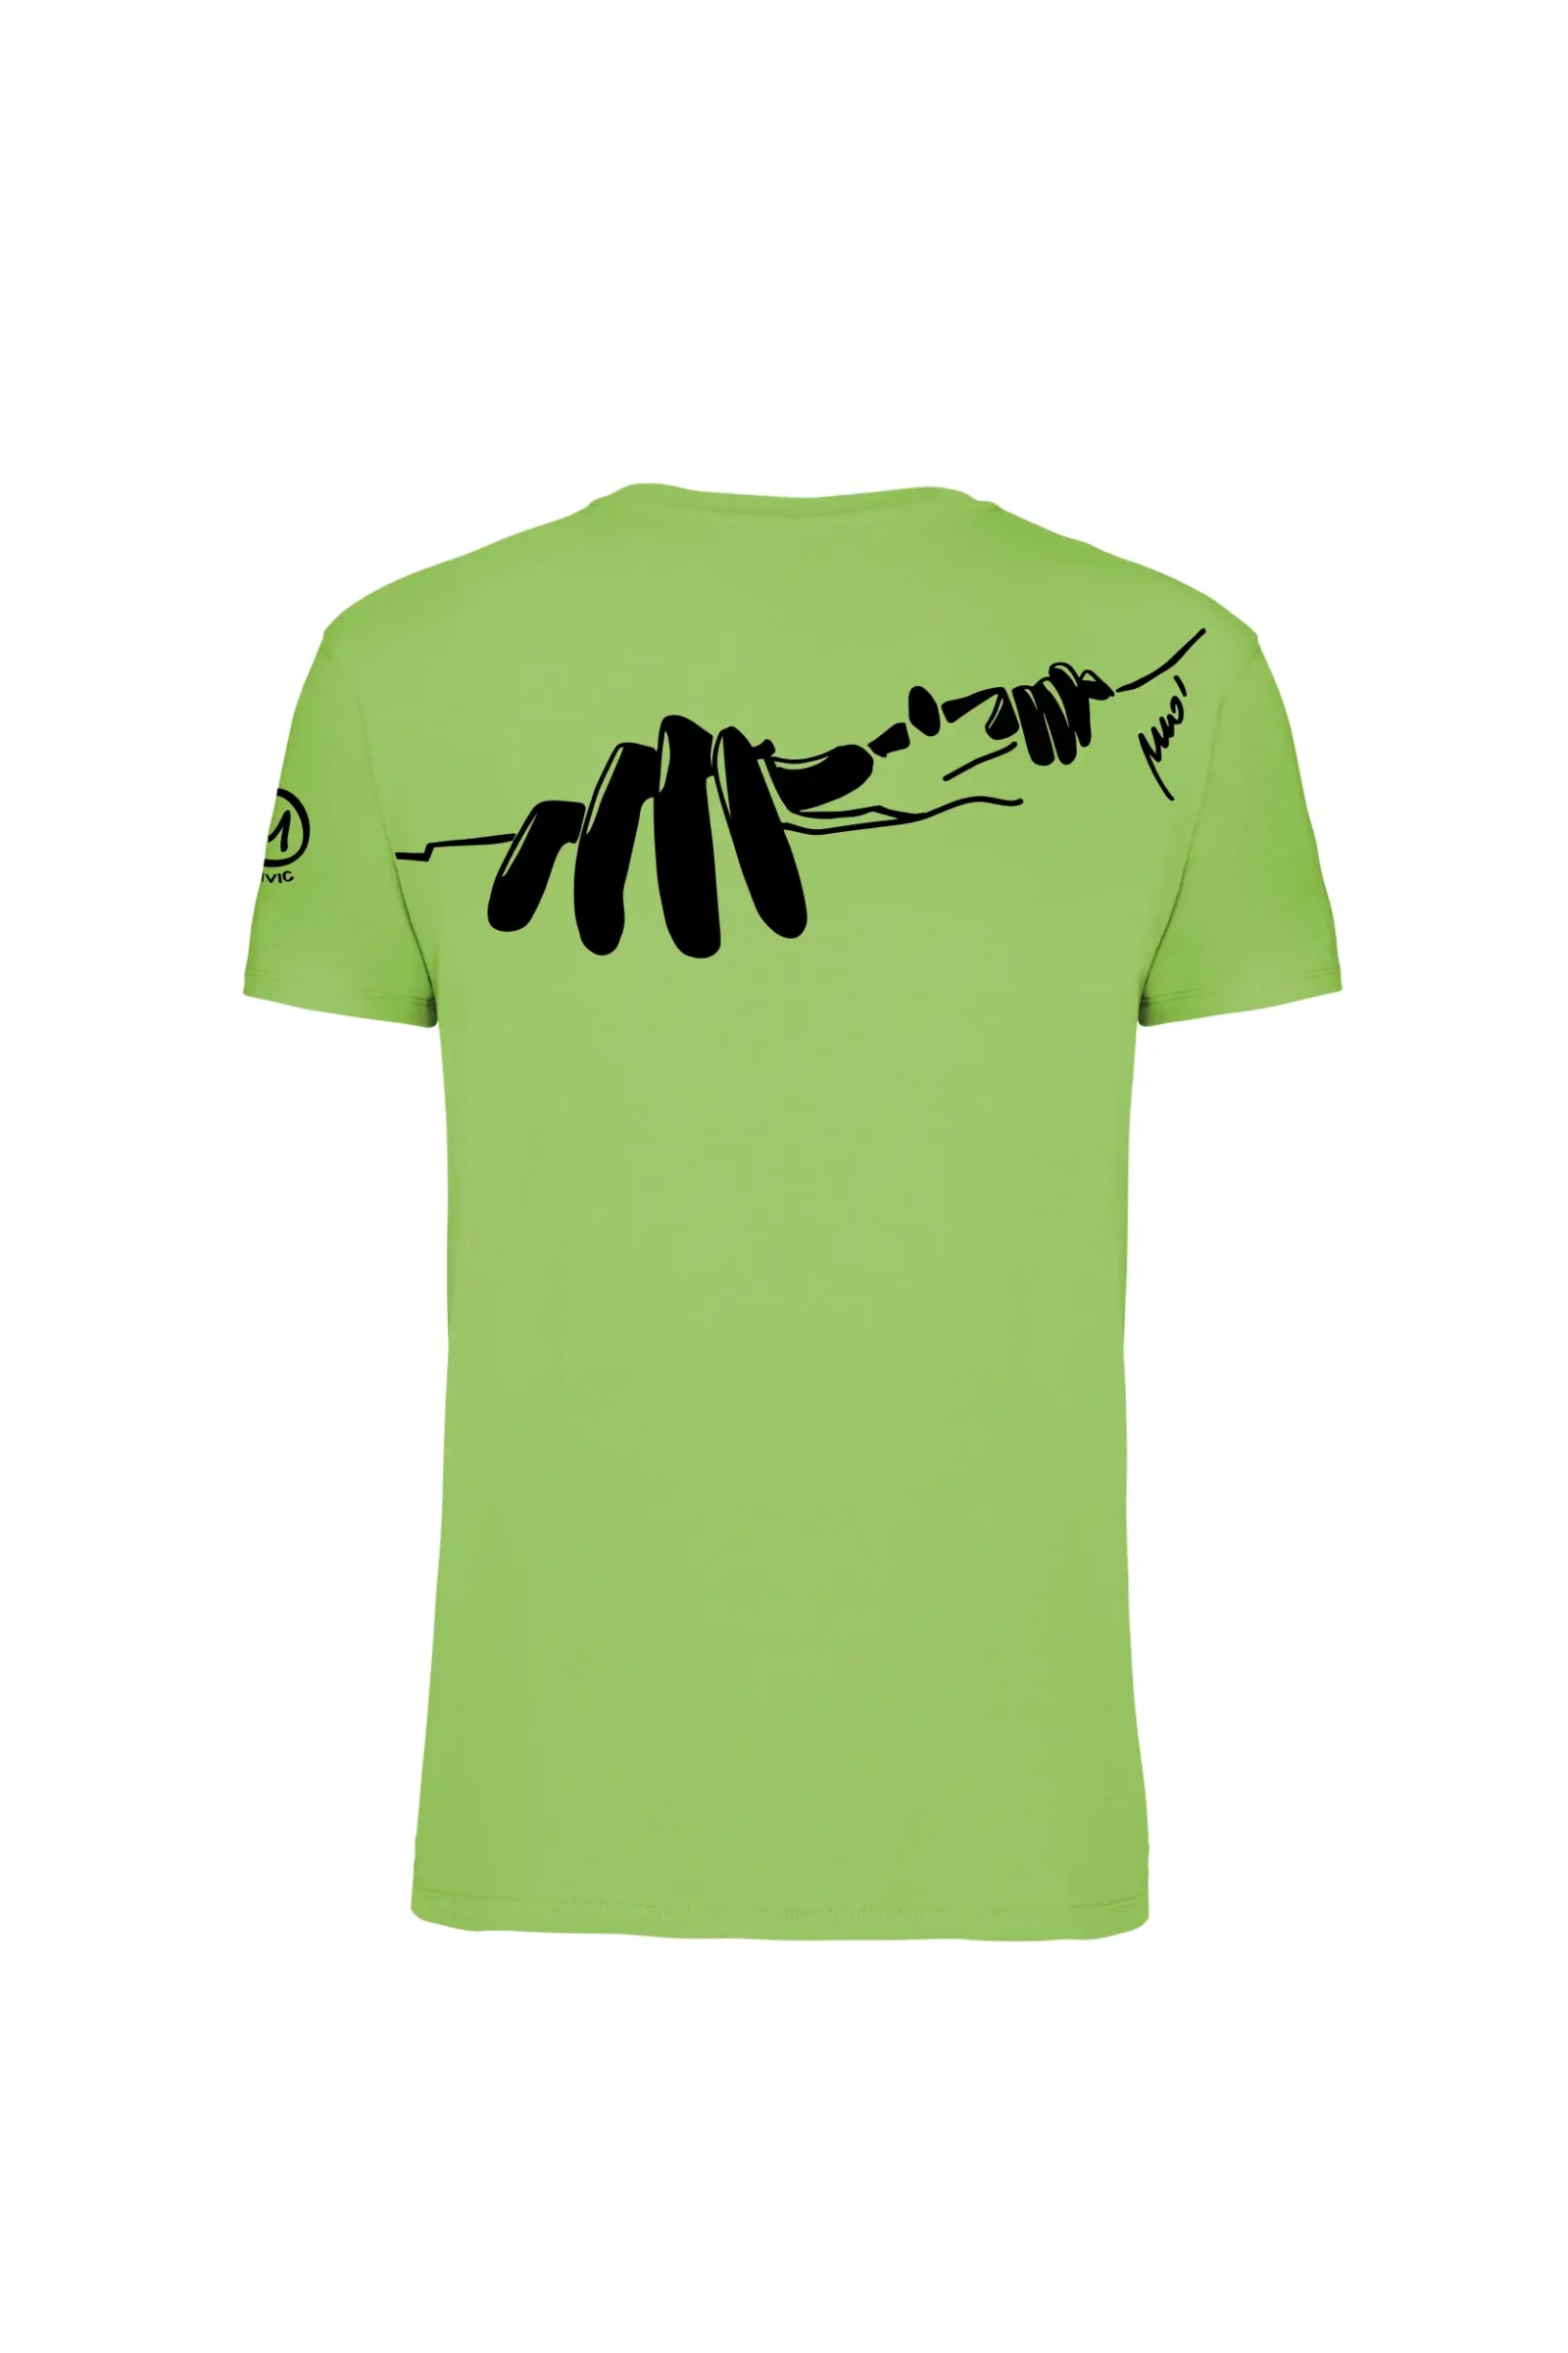 T-shirt escalade homme citron vert - "Manone" HASH MONVIC